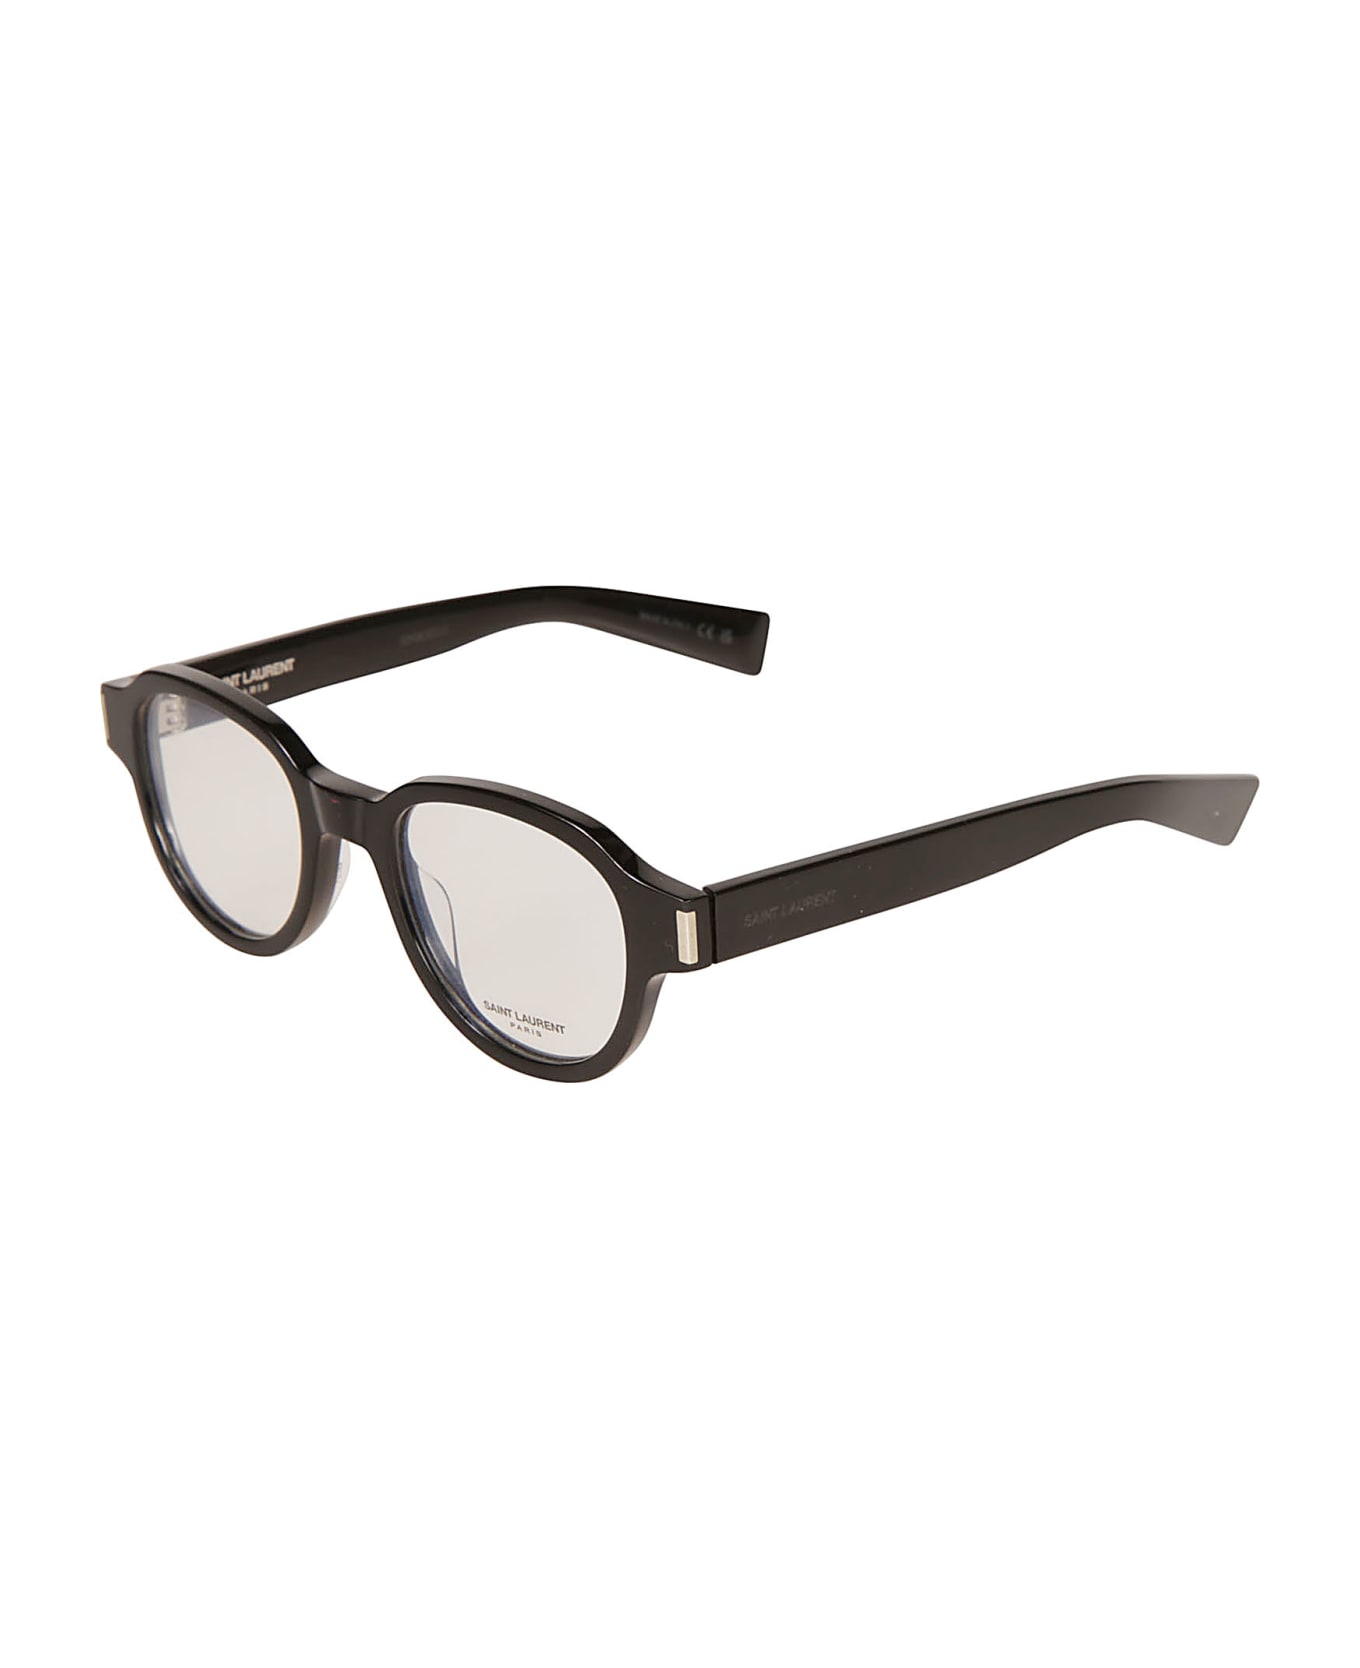 Saint Laurent Eyewear Sl 548 Opt Frame - Black